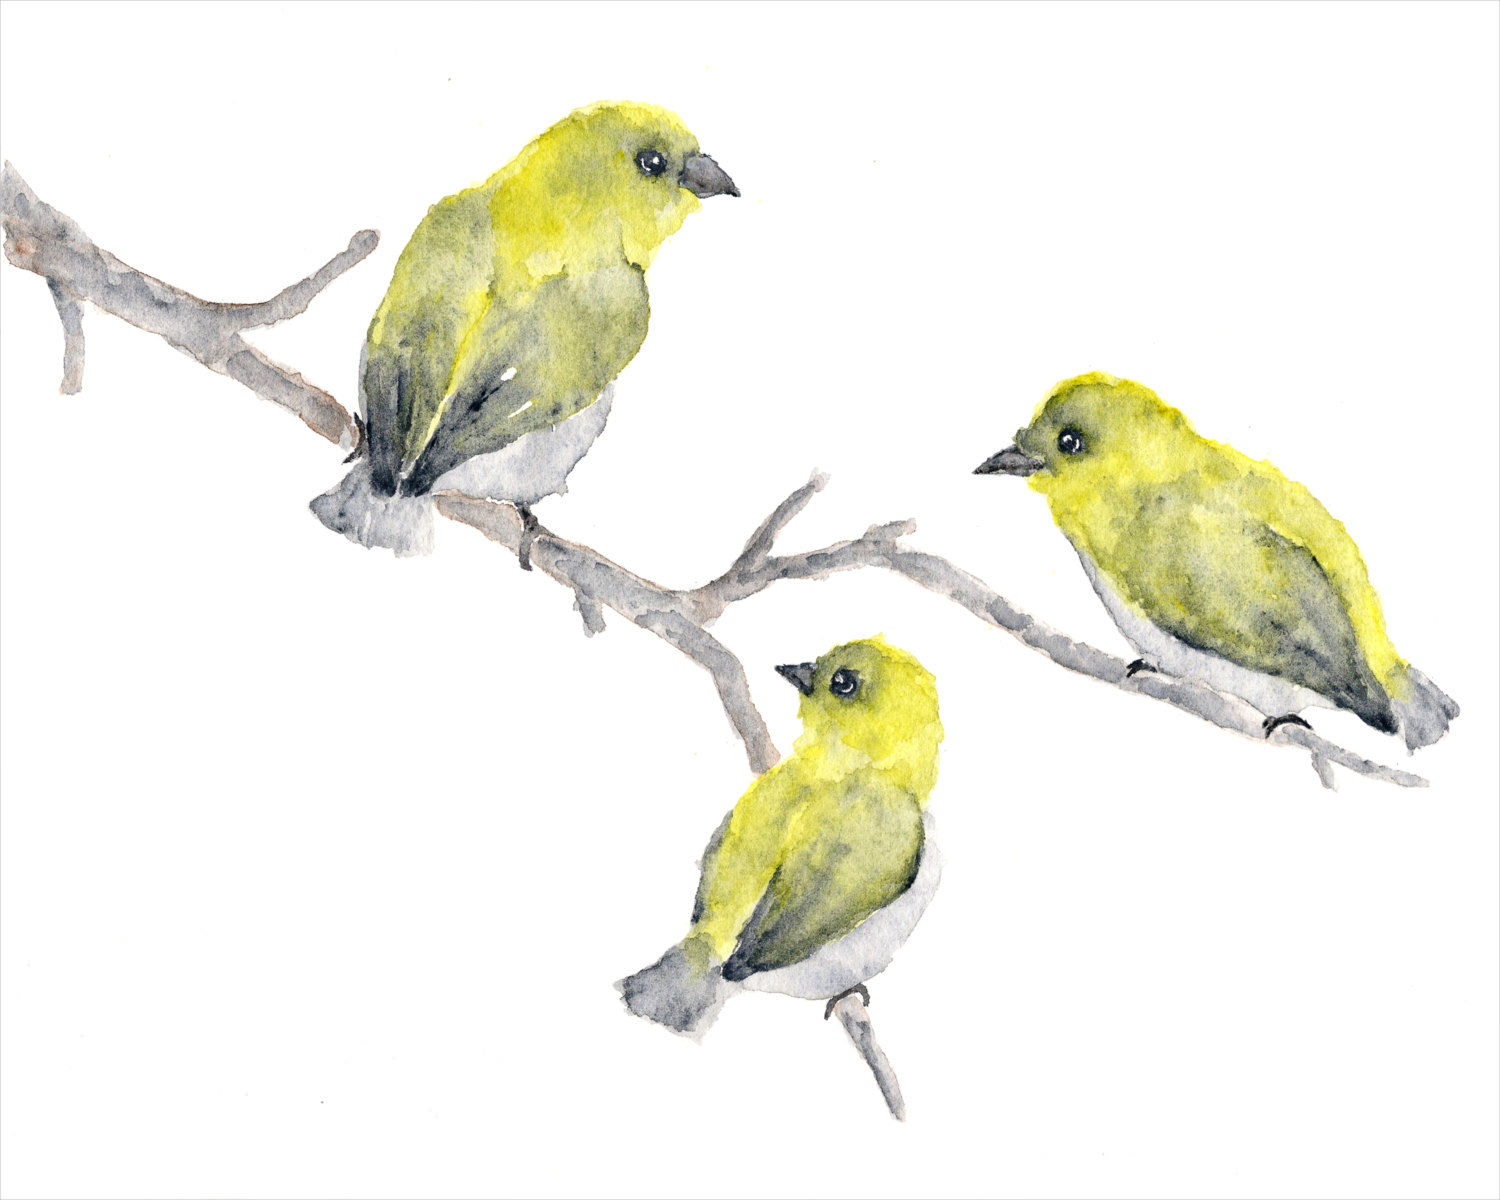 watercolor bird painting